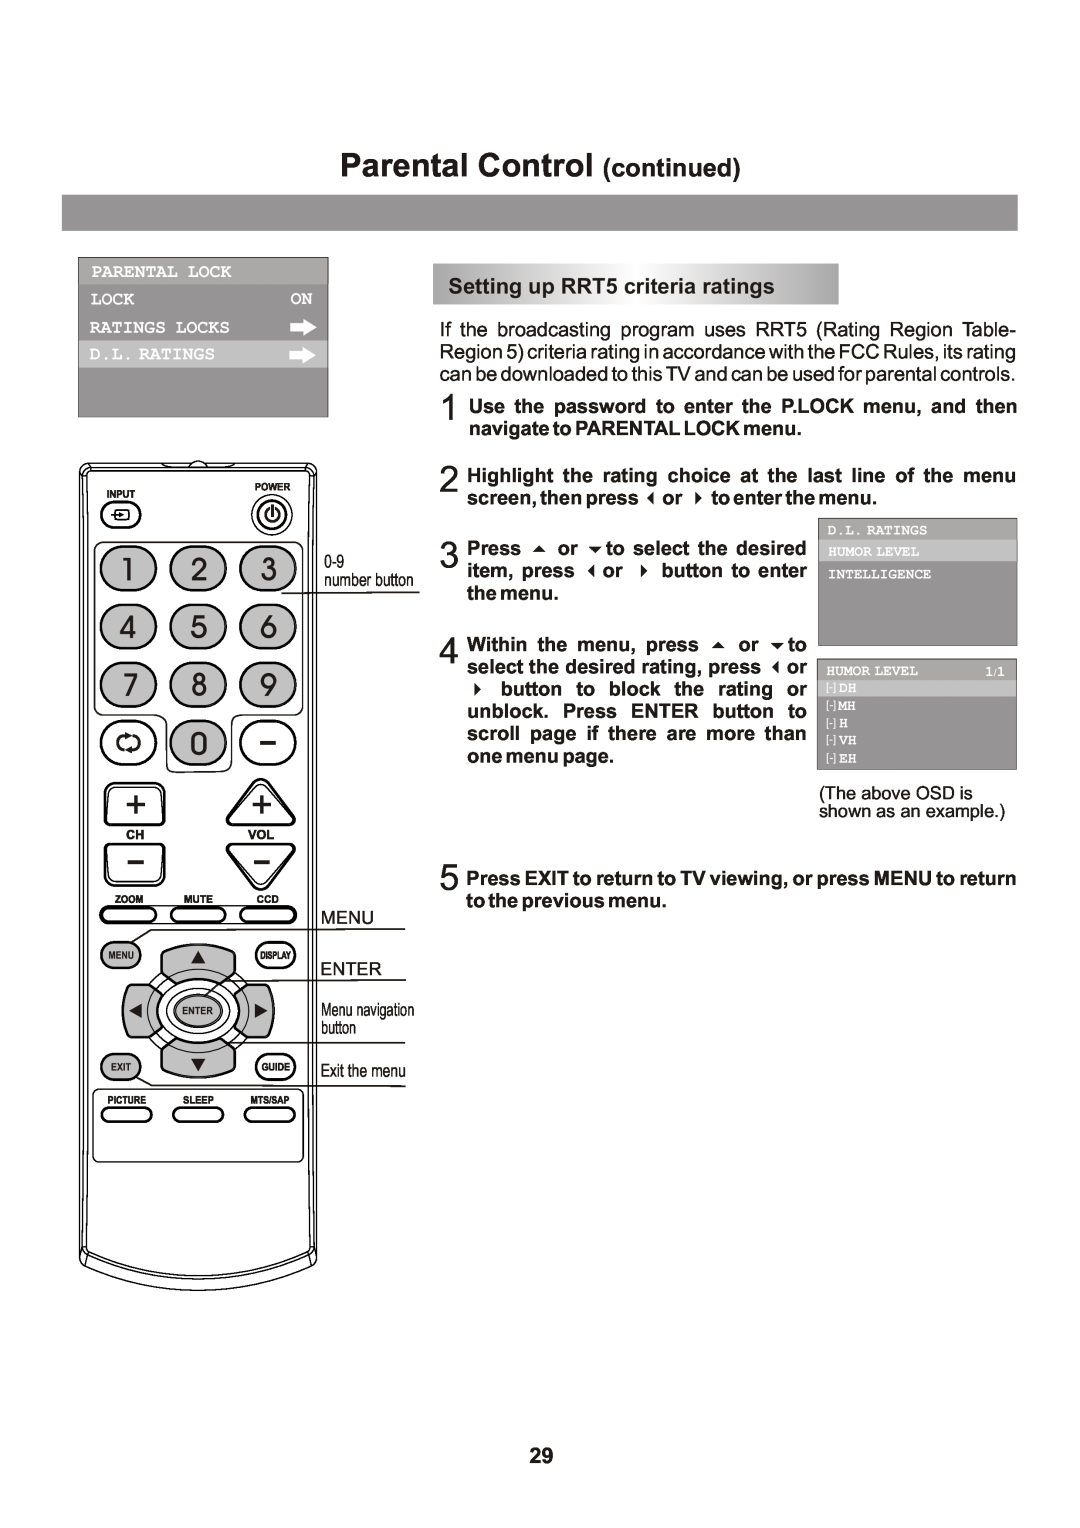 Memorex Flat Screen Tv manual Parental Control continued, Setting up RRT5 criteria ratings 